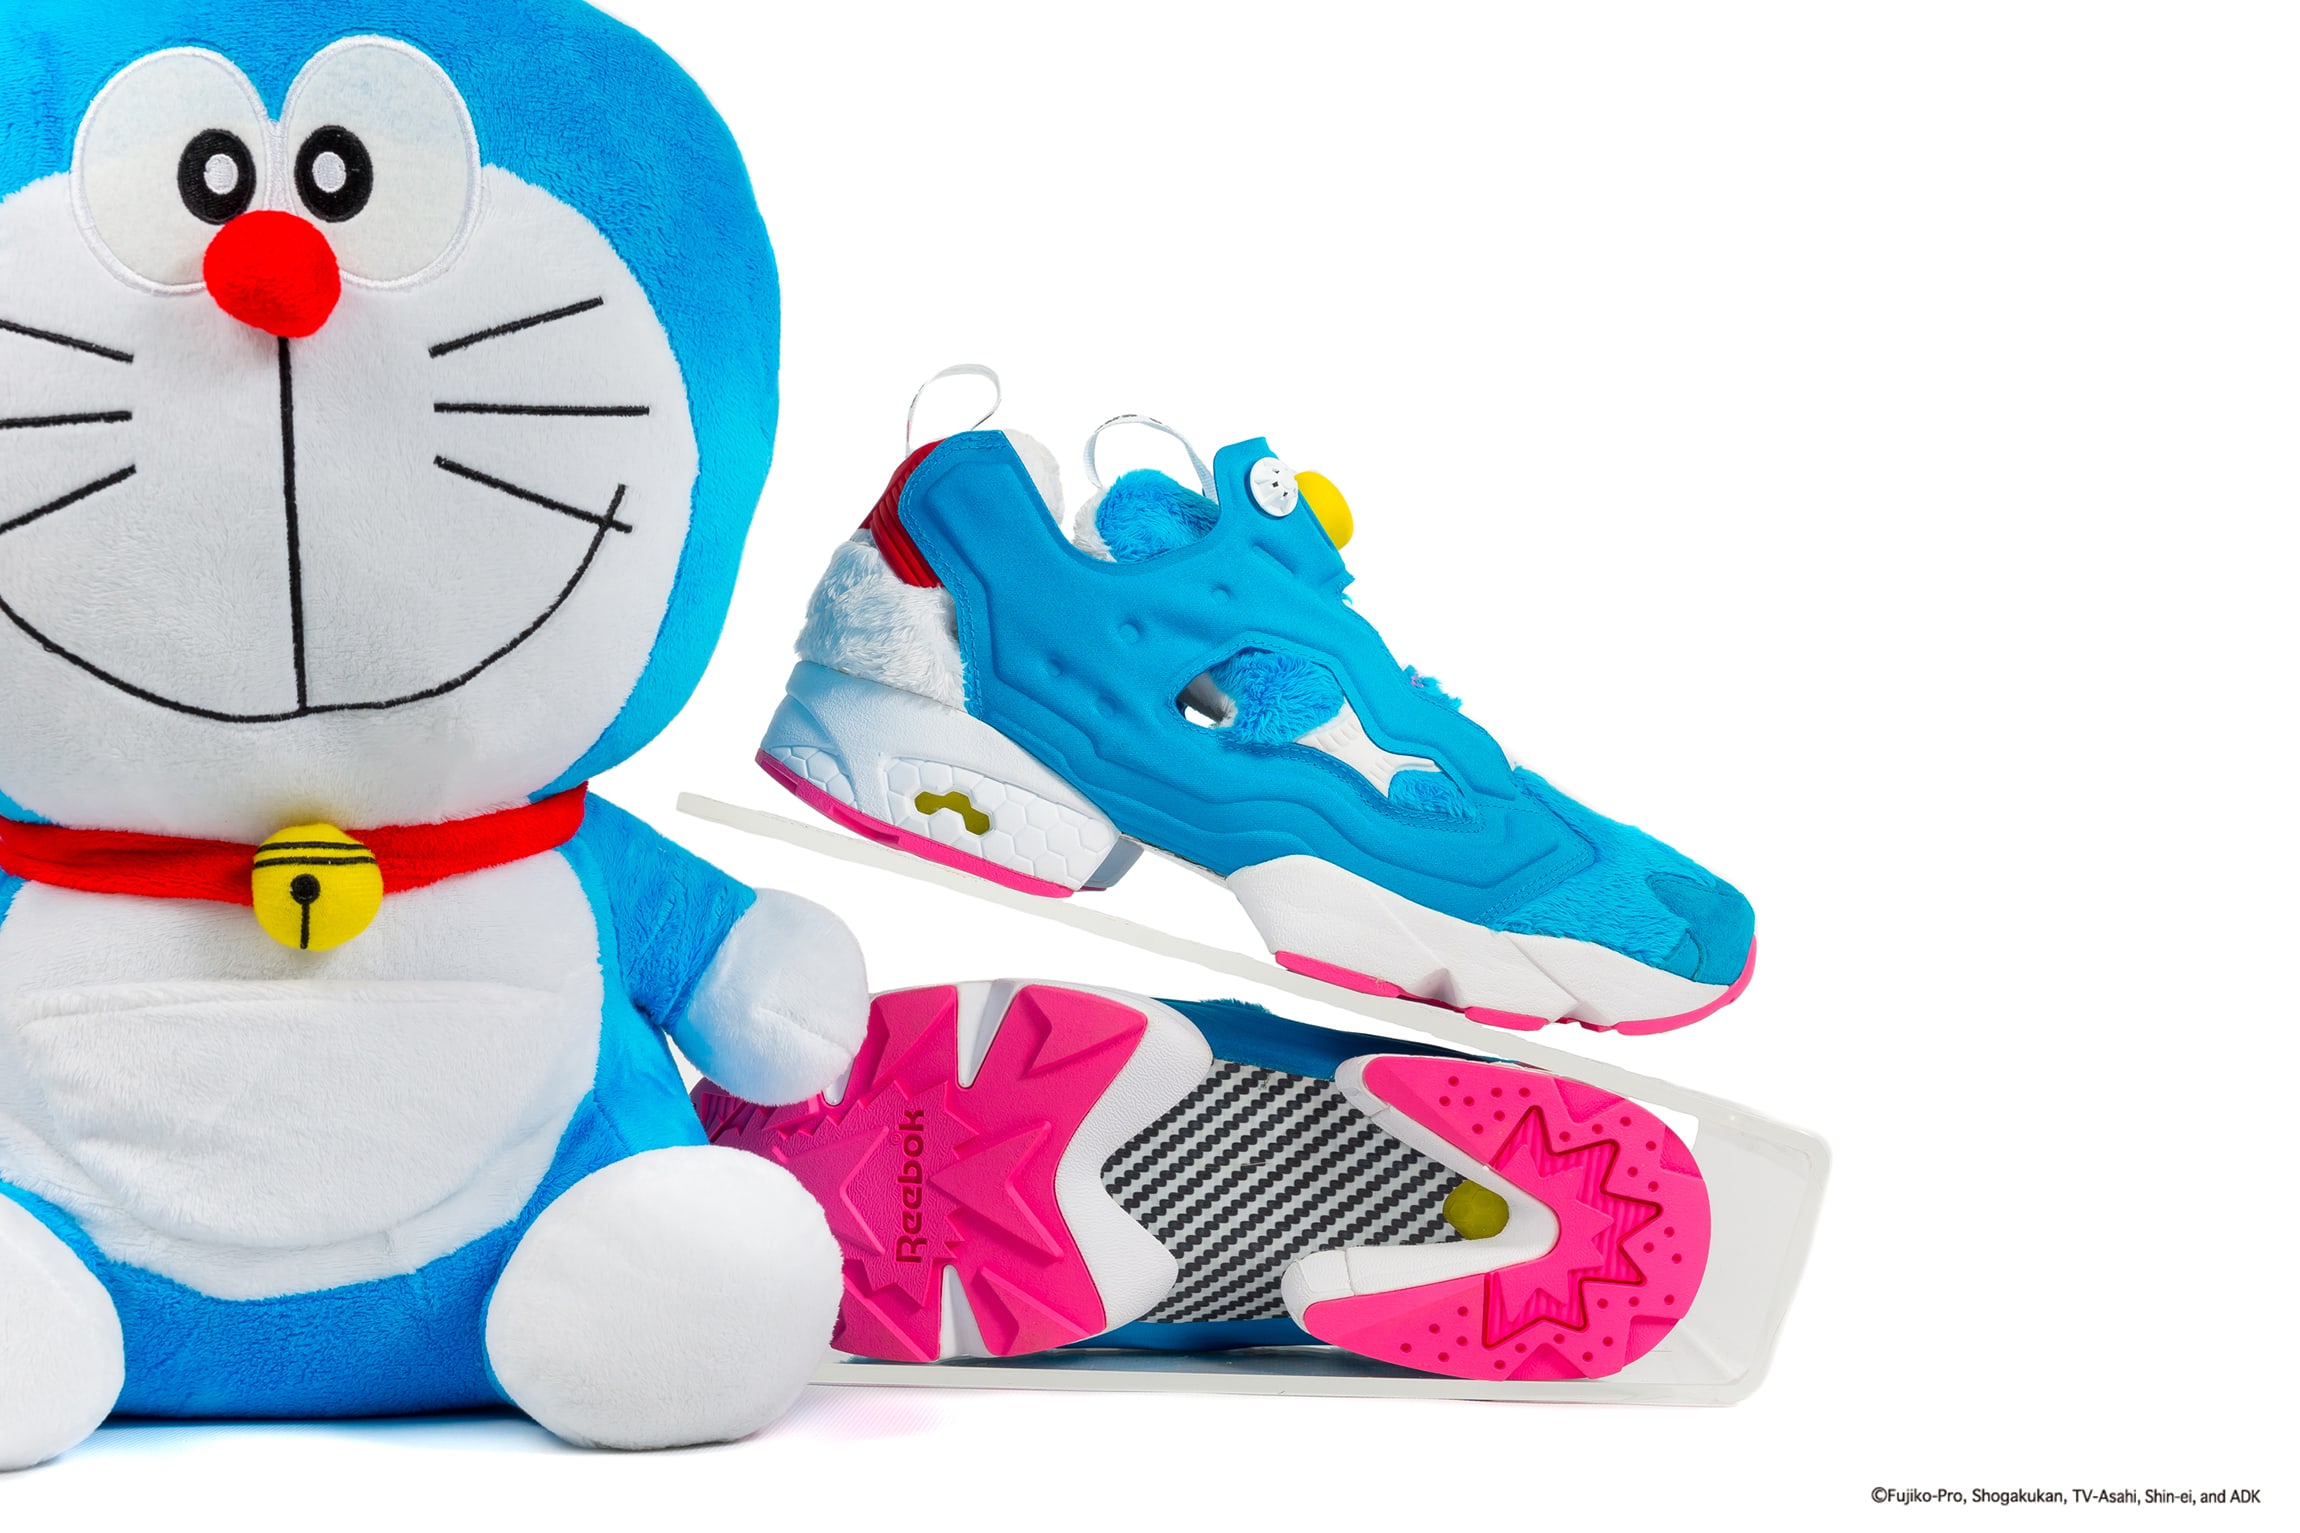 Packer Shoes Atmos Doraemon Reebok Insta Pump Fury